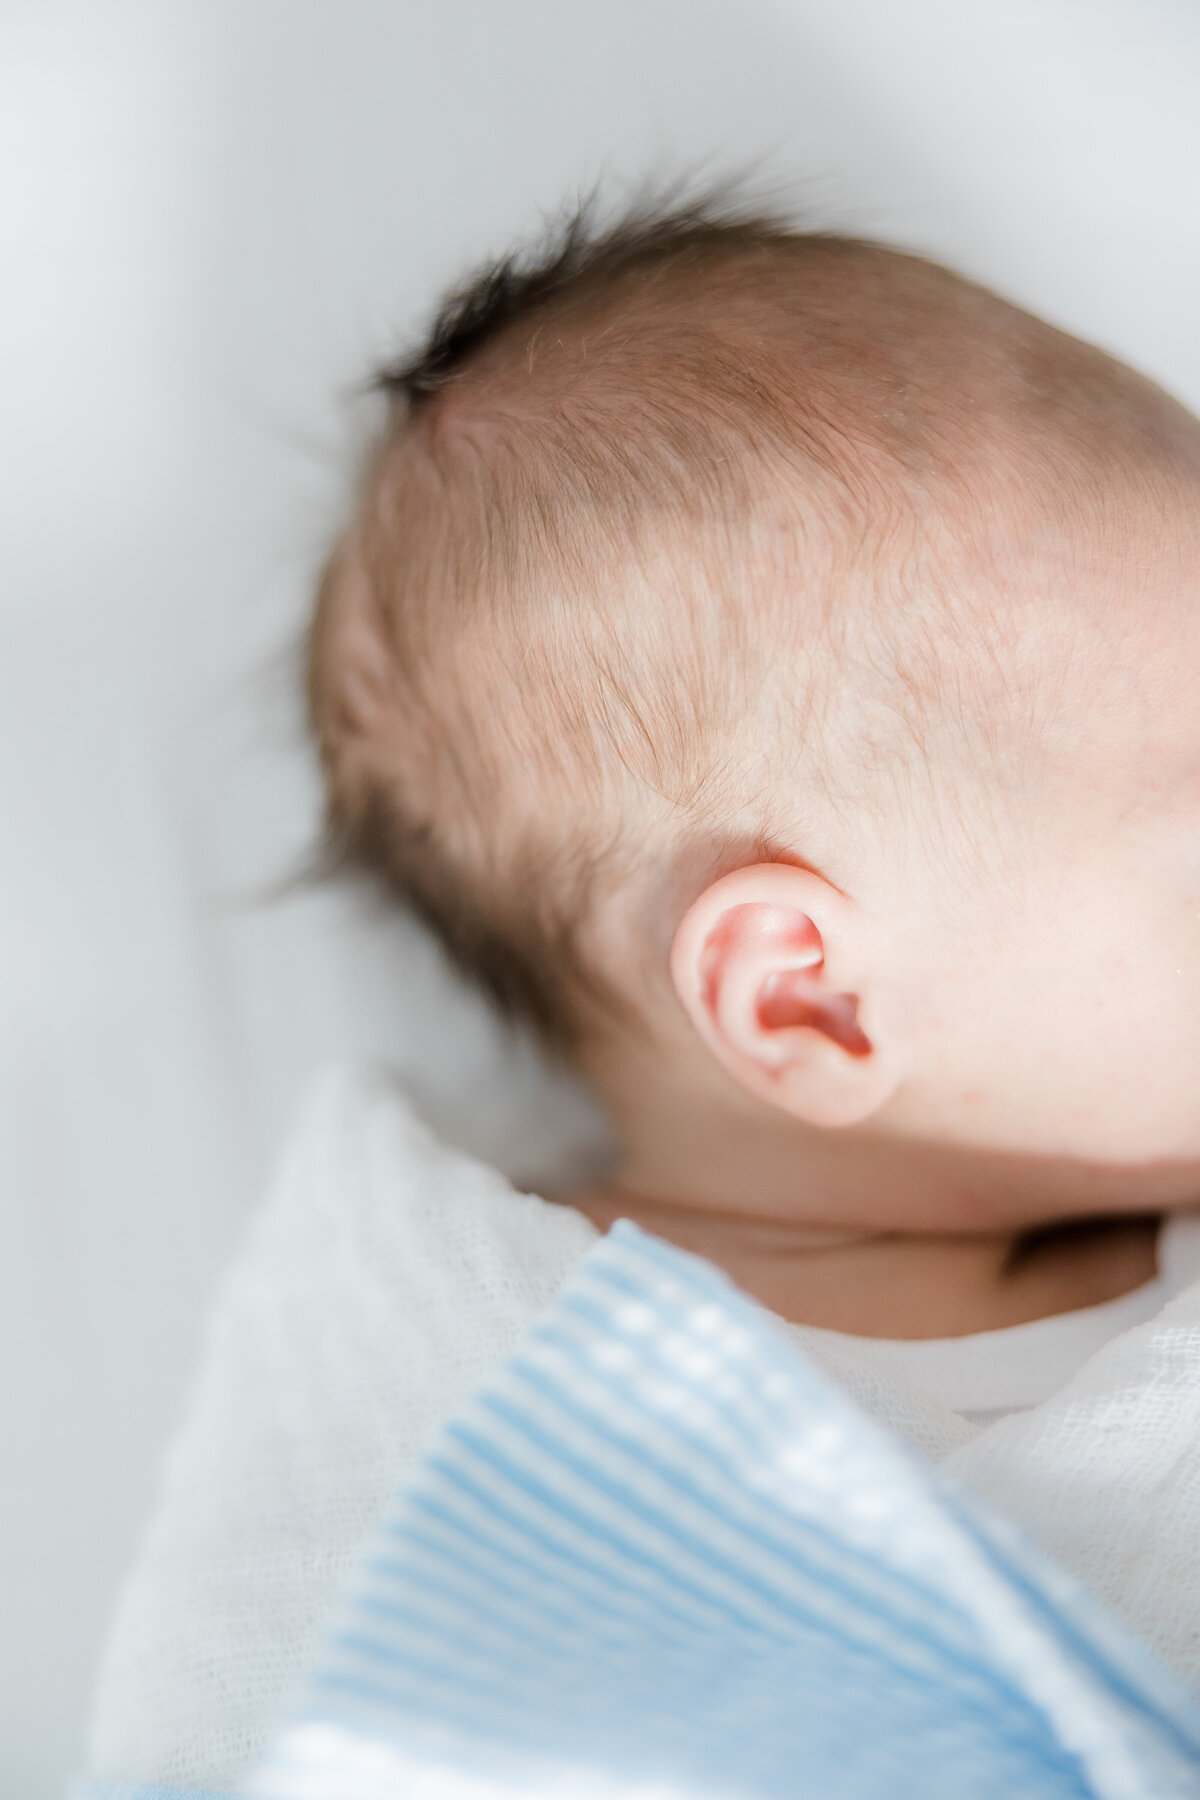 close up image of newborn's ear